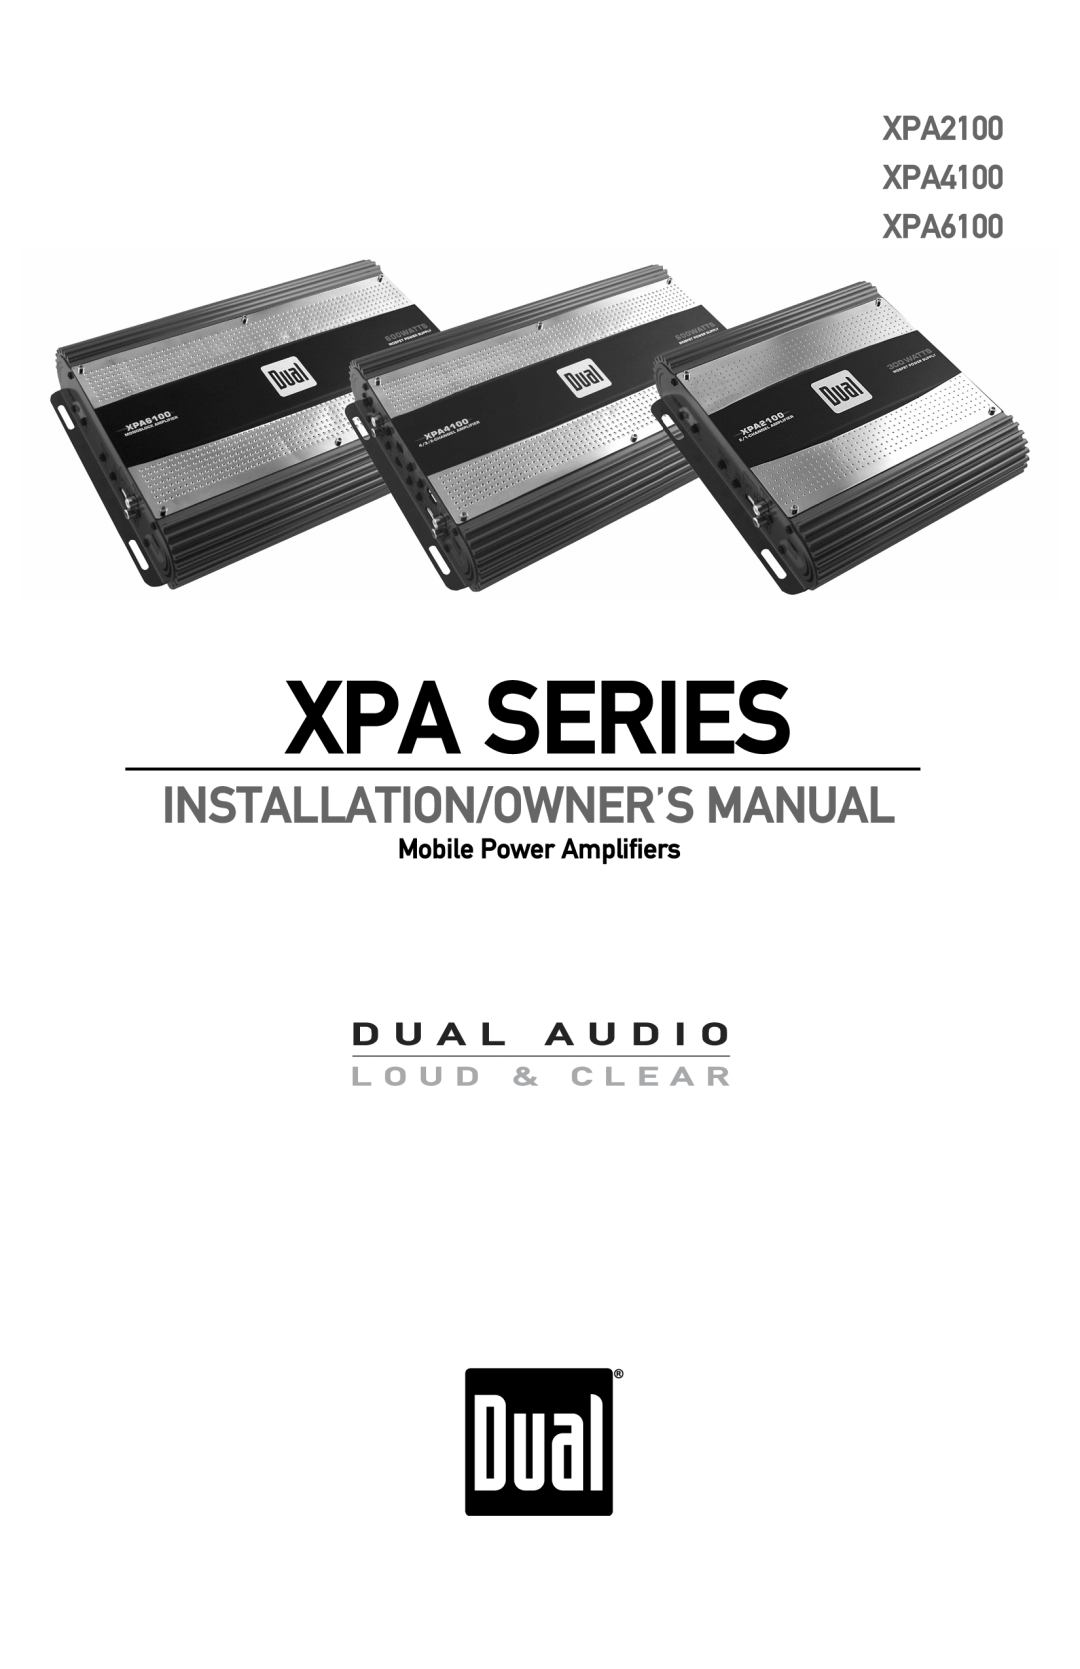 Dual owner manual XPA2100 XPA4100 XPA6100, Mobile Power Amplifiers, Xpa Series, Installation/Owner’S Manual 